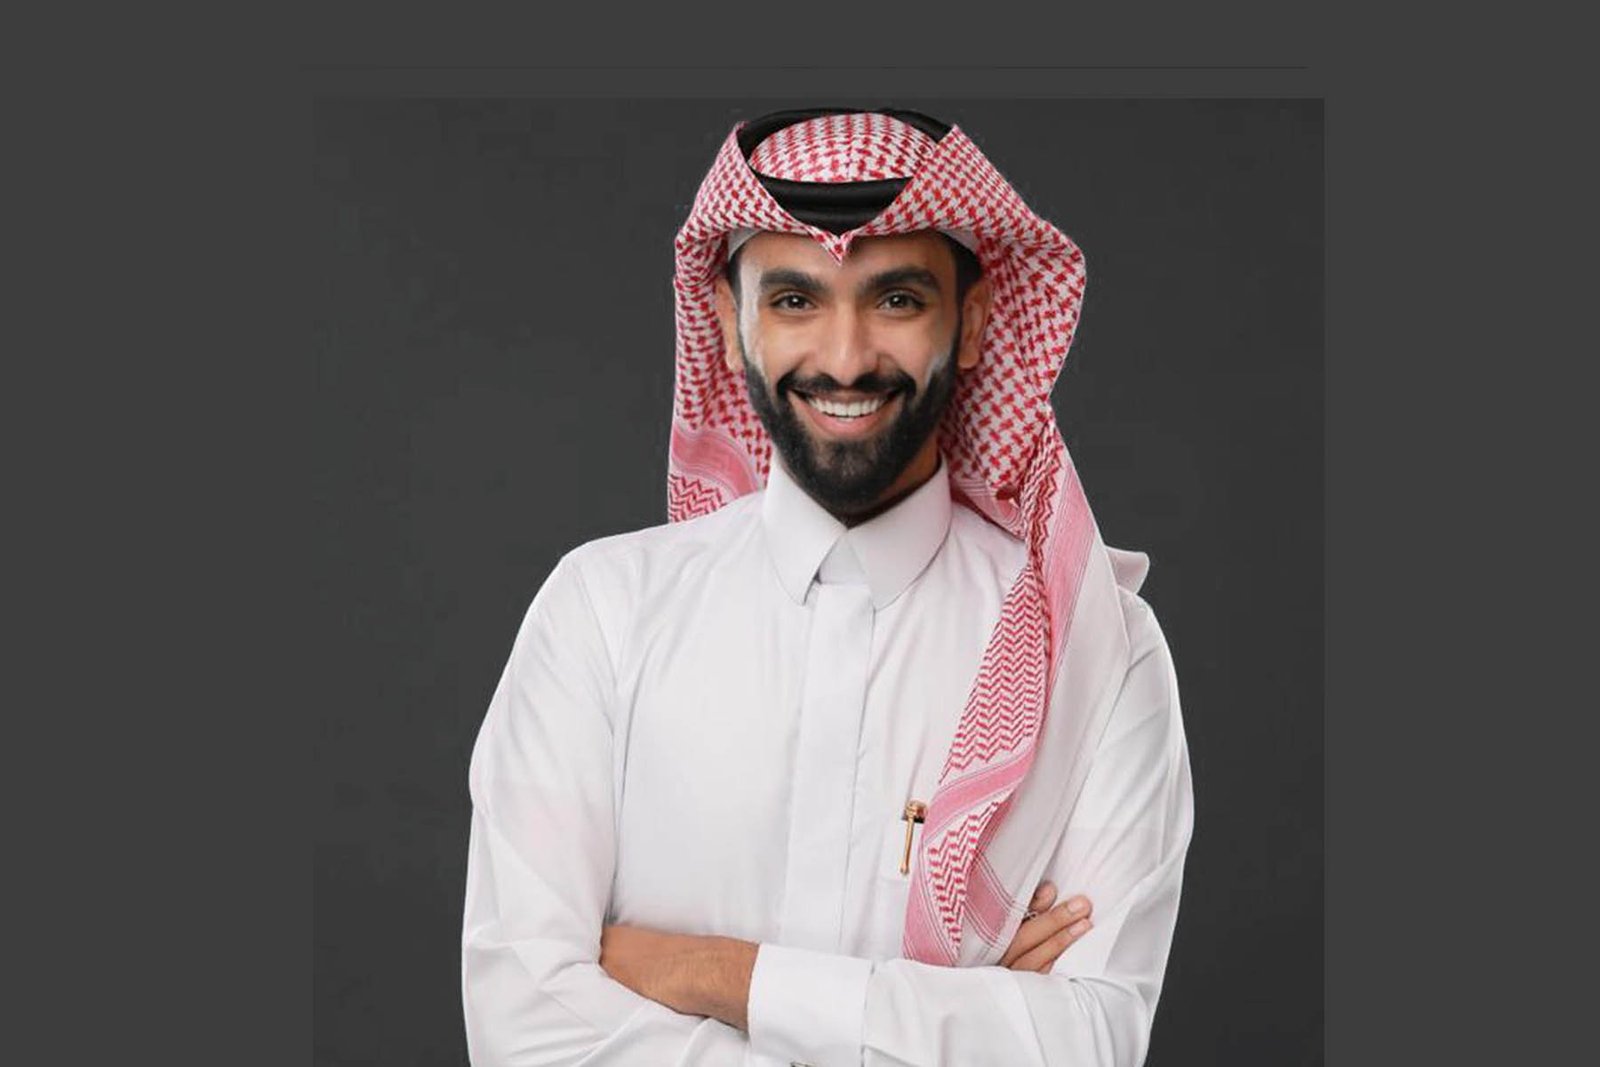 Mohammed Al Hasoon Alias NMR Hasoon: Multipotentialite Entrepreneur from Saudi Arabia